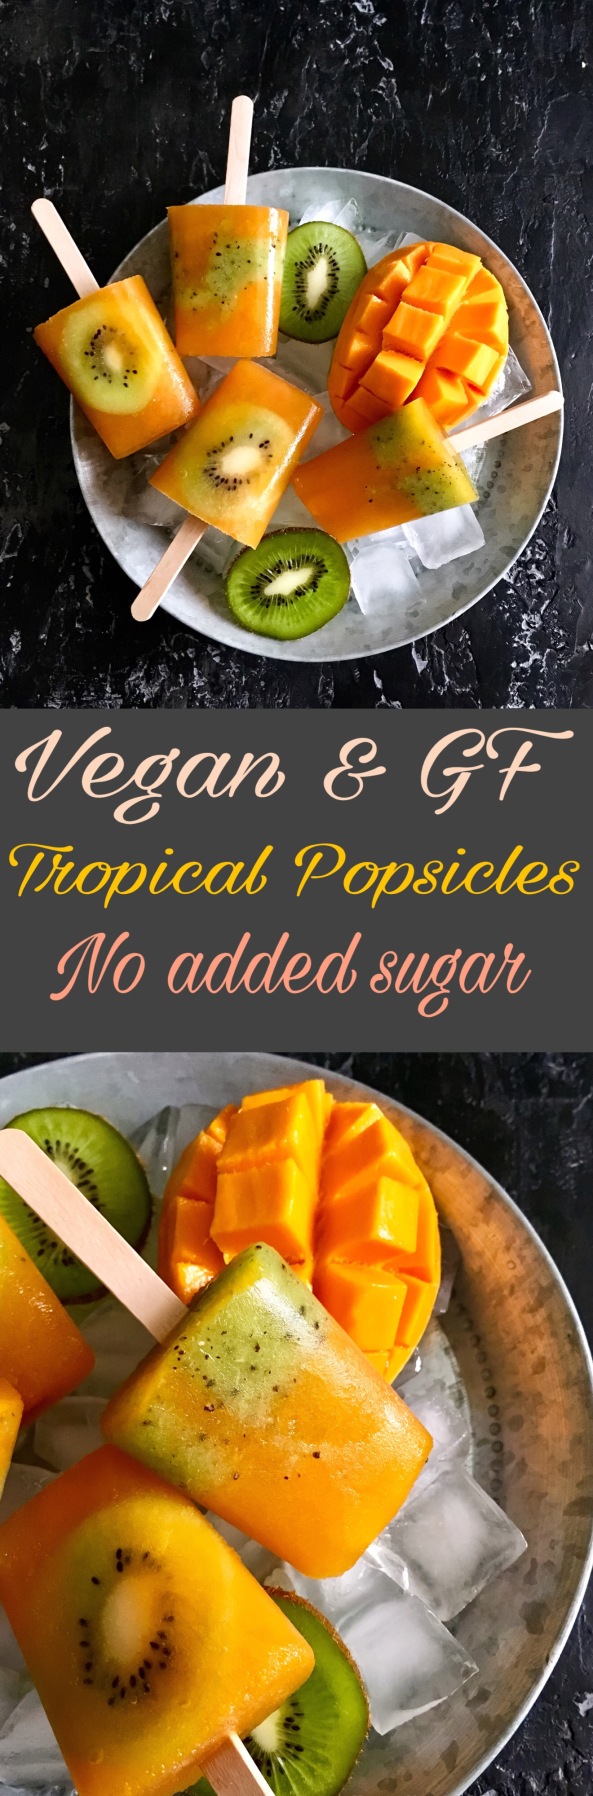 Vegan & GF tropical Popsicles No added sugar